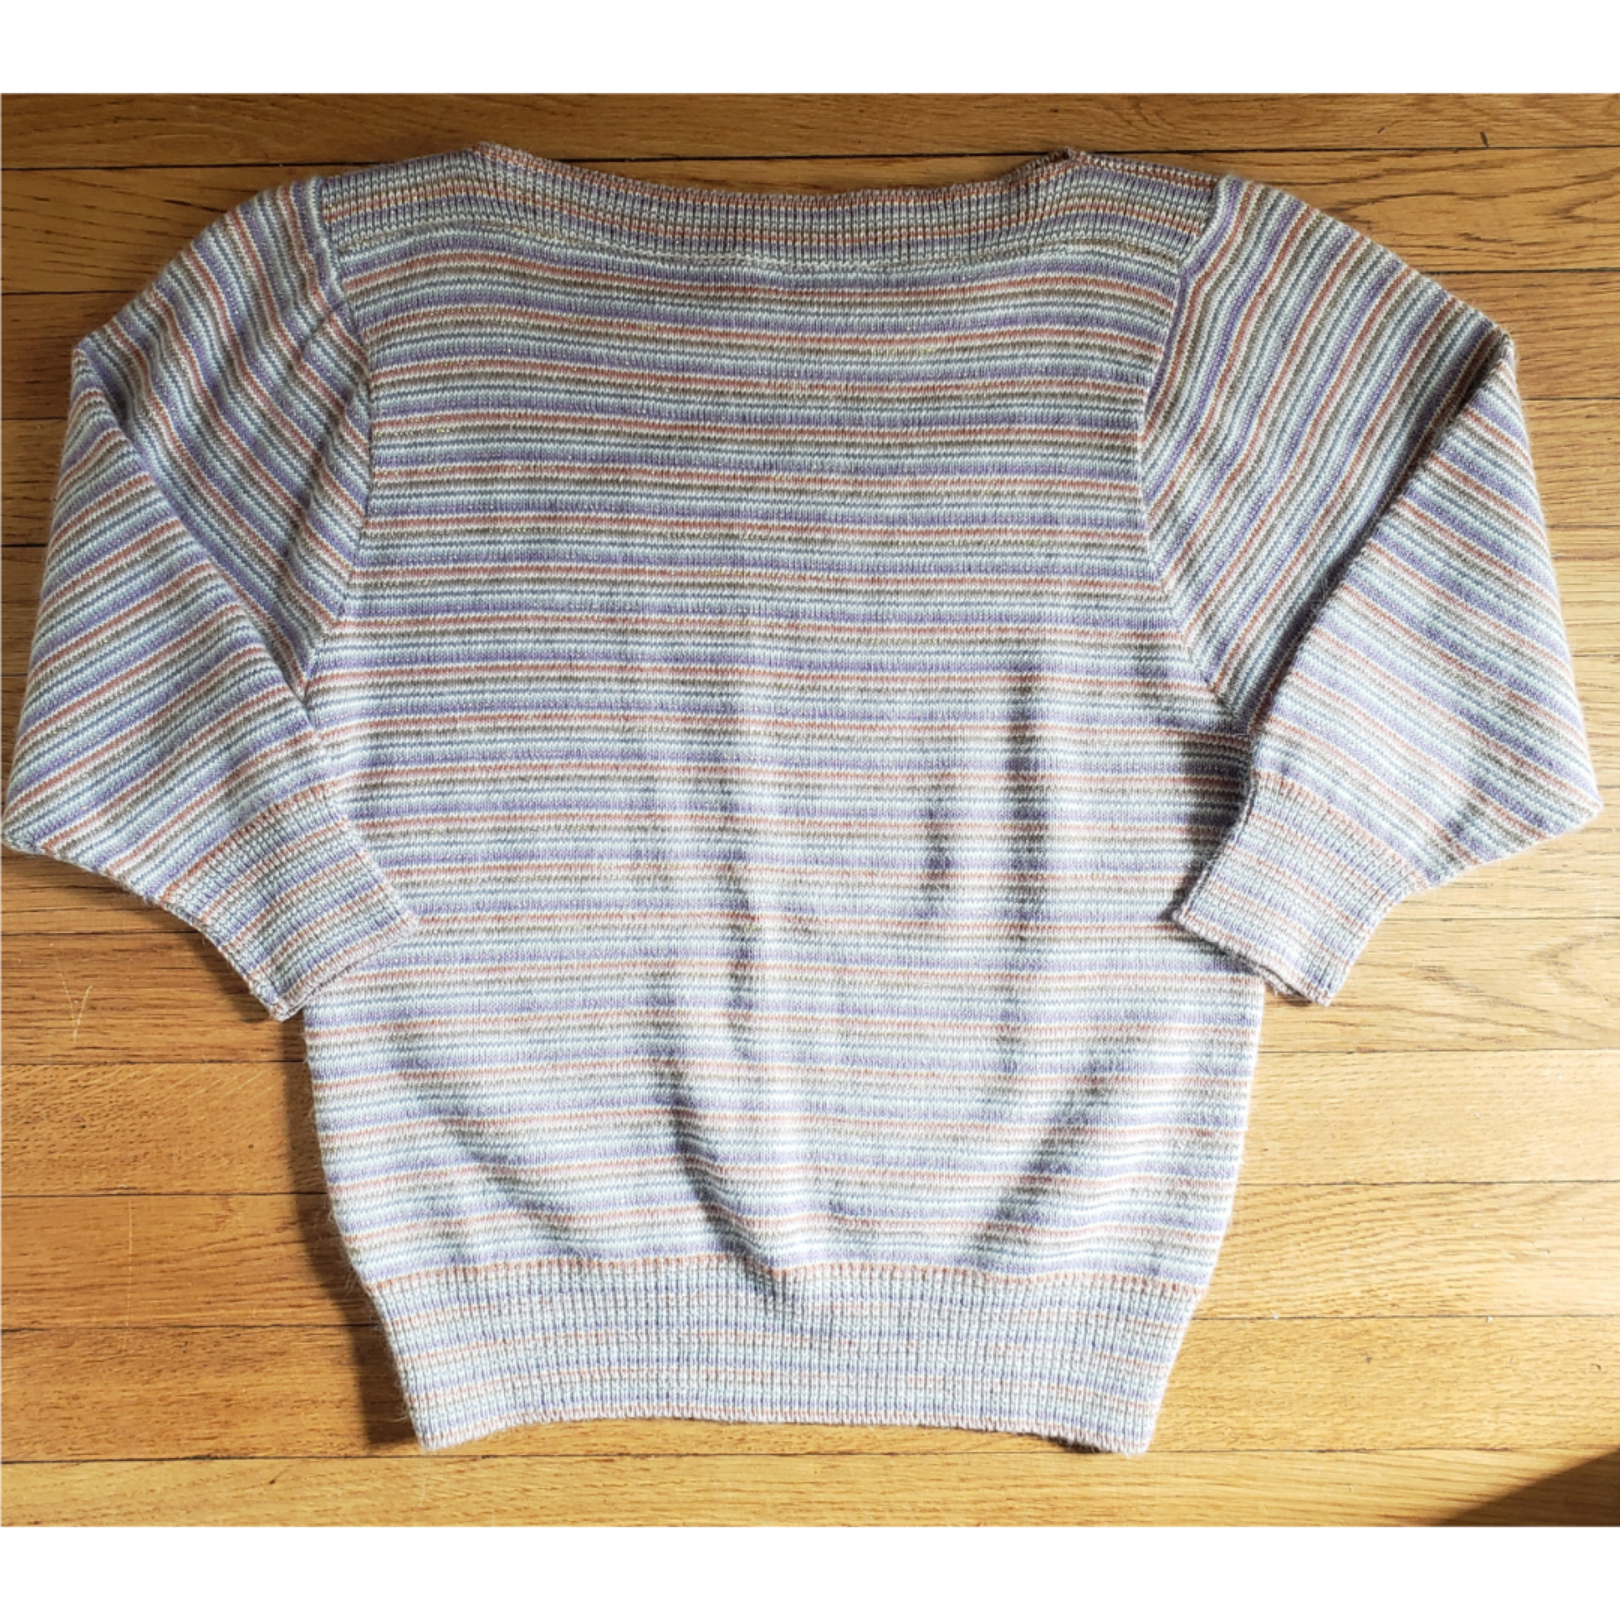 Striped 1980s soft sweater